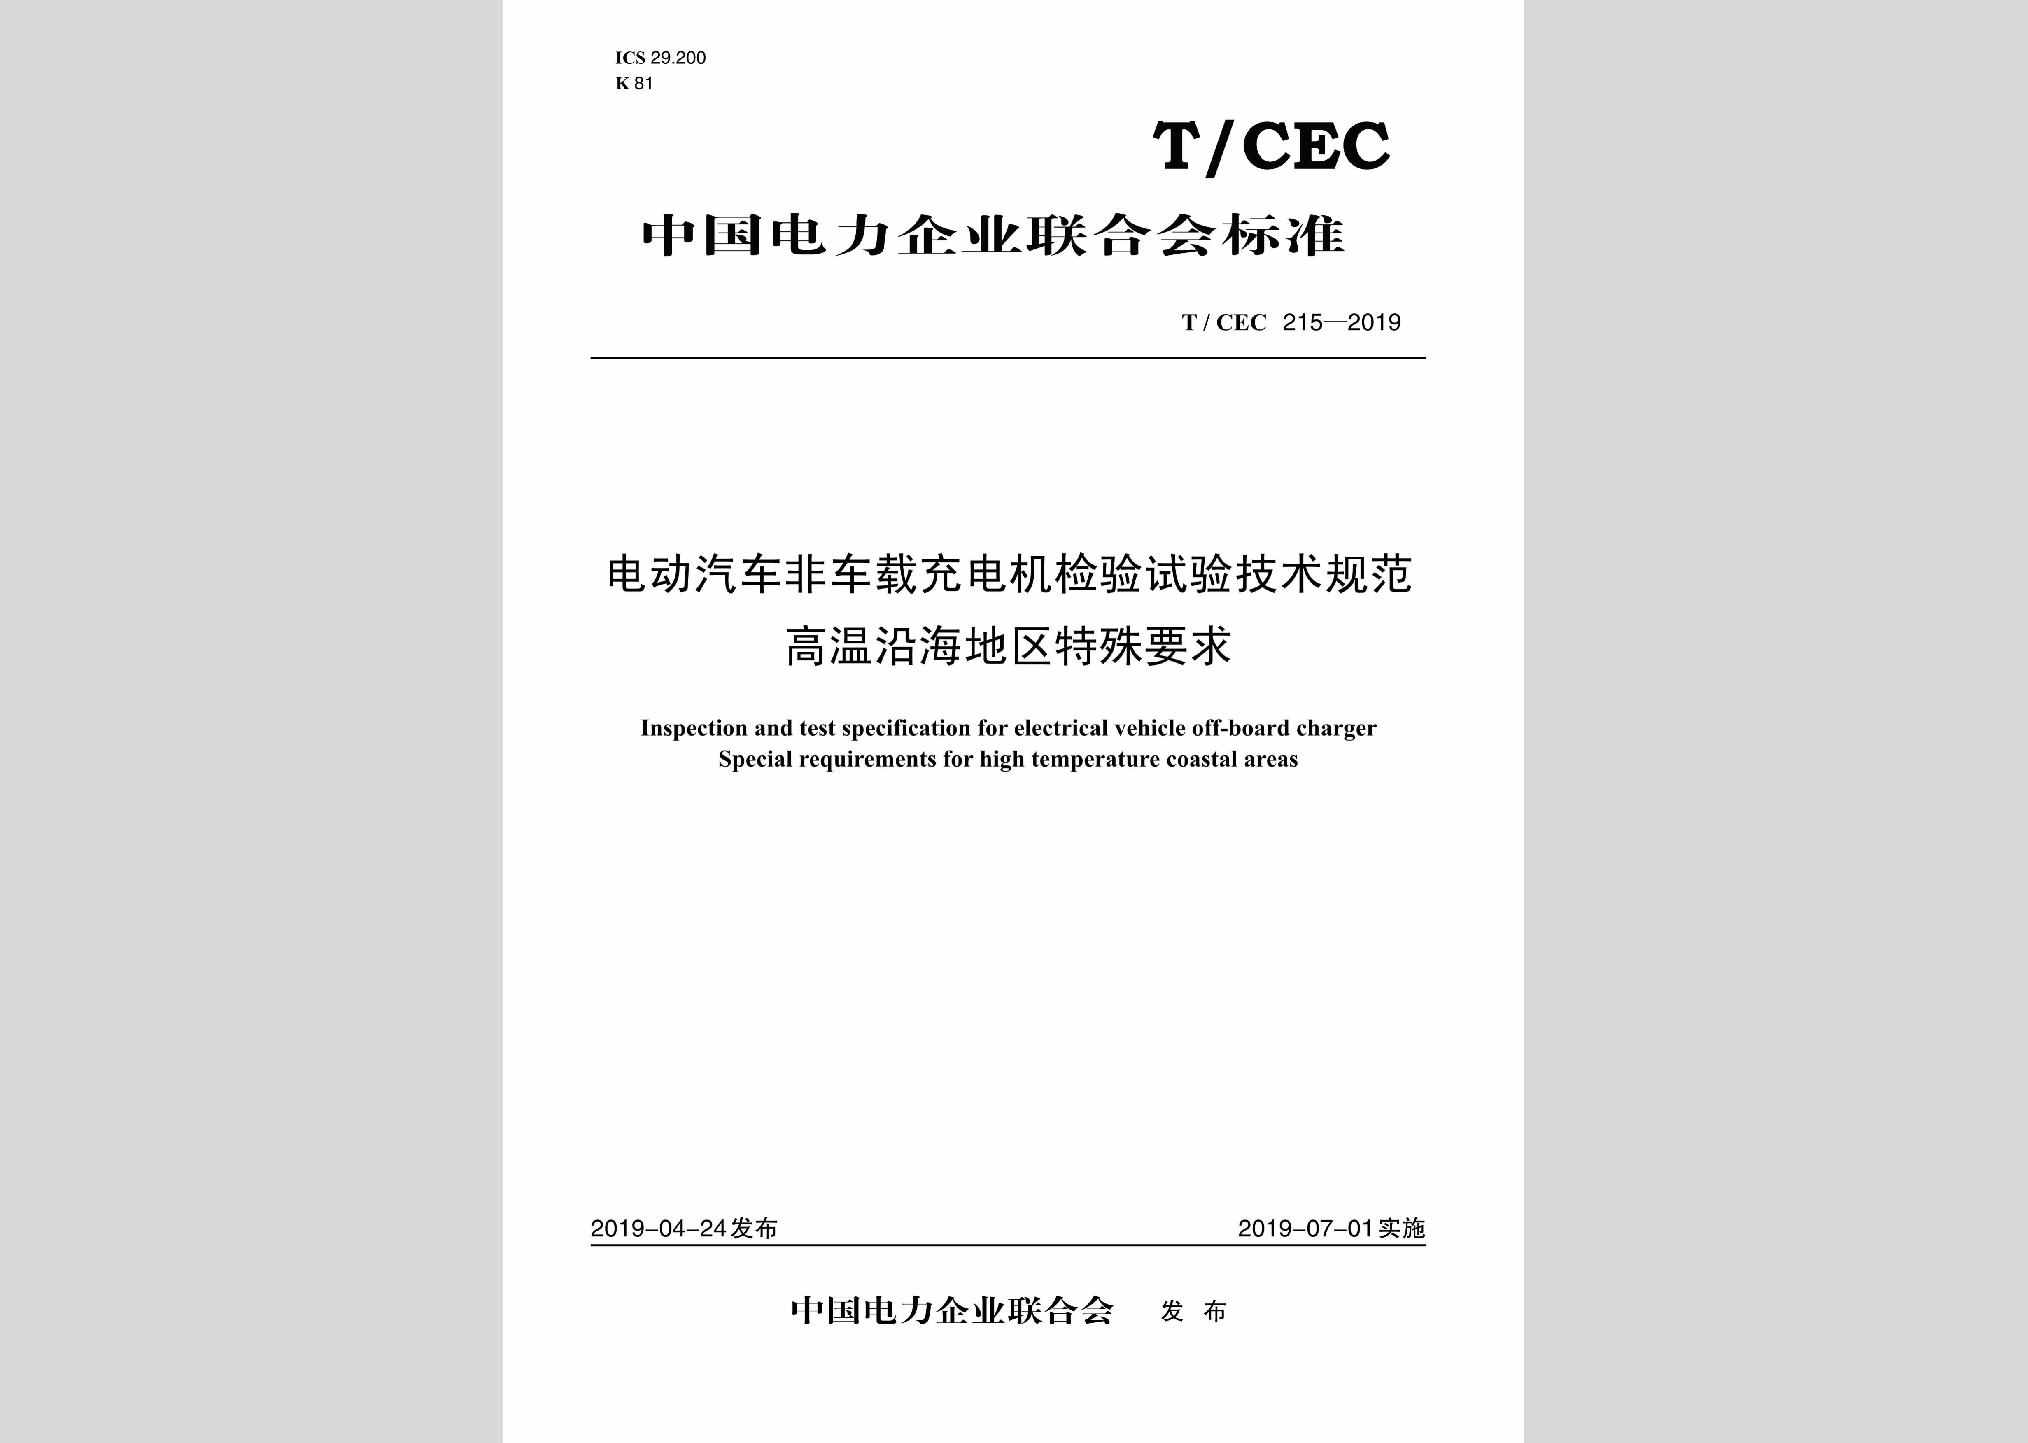 T/CEC215-2019：电动汽车非车载充电机检验试验技术规范高温沿海地区特殊要求